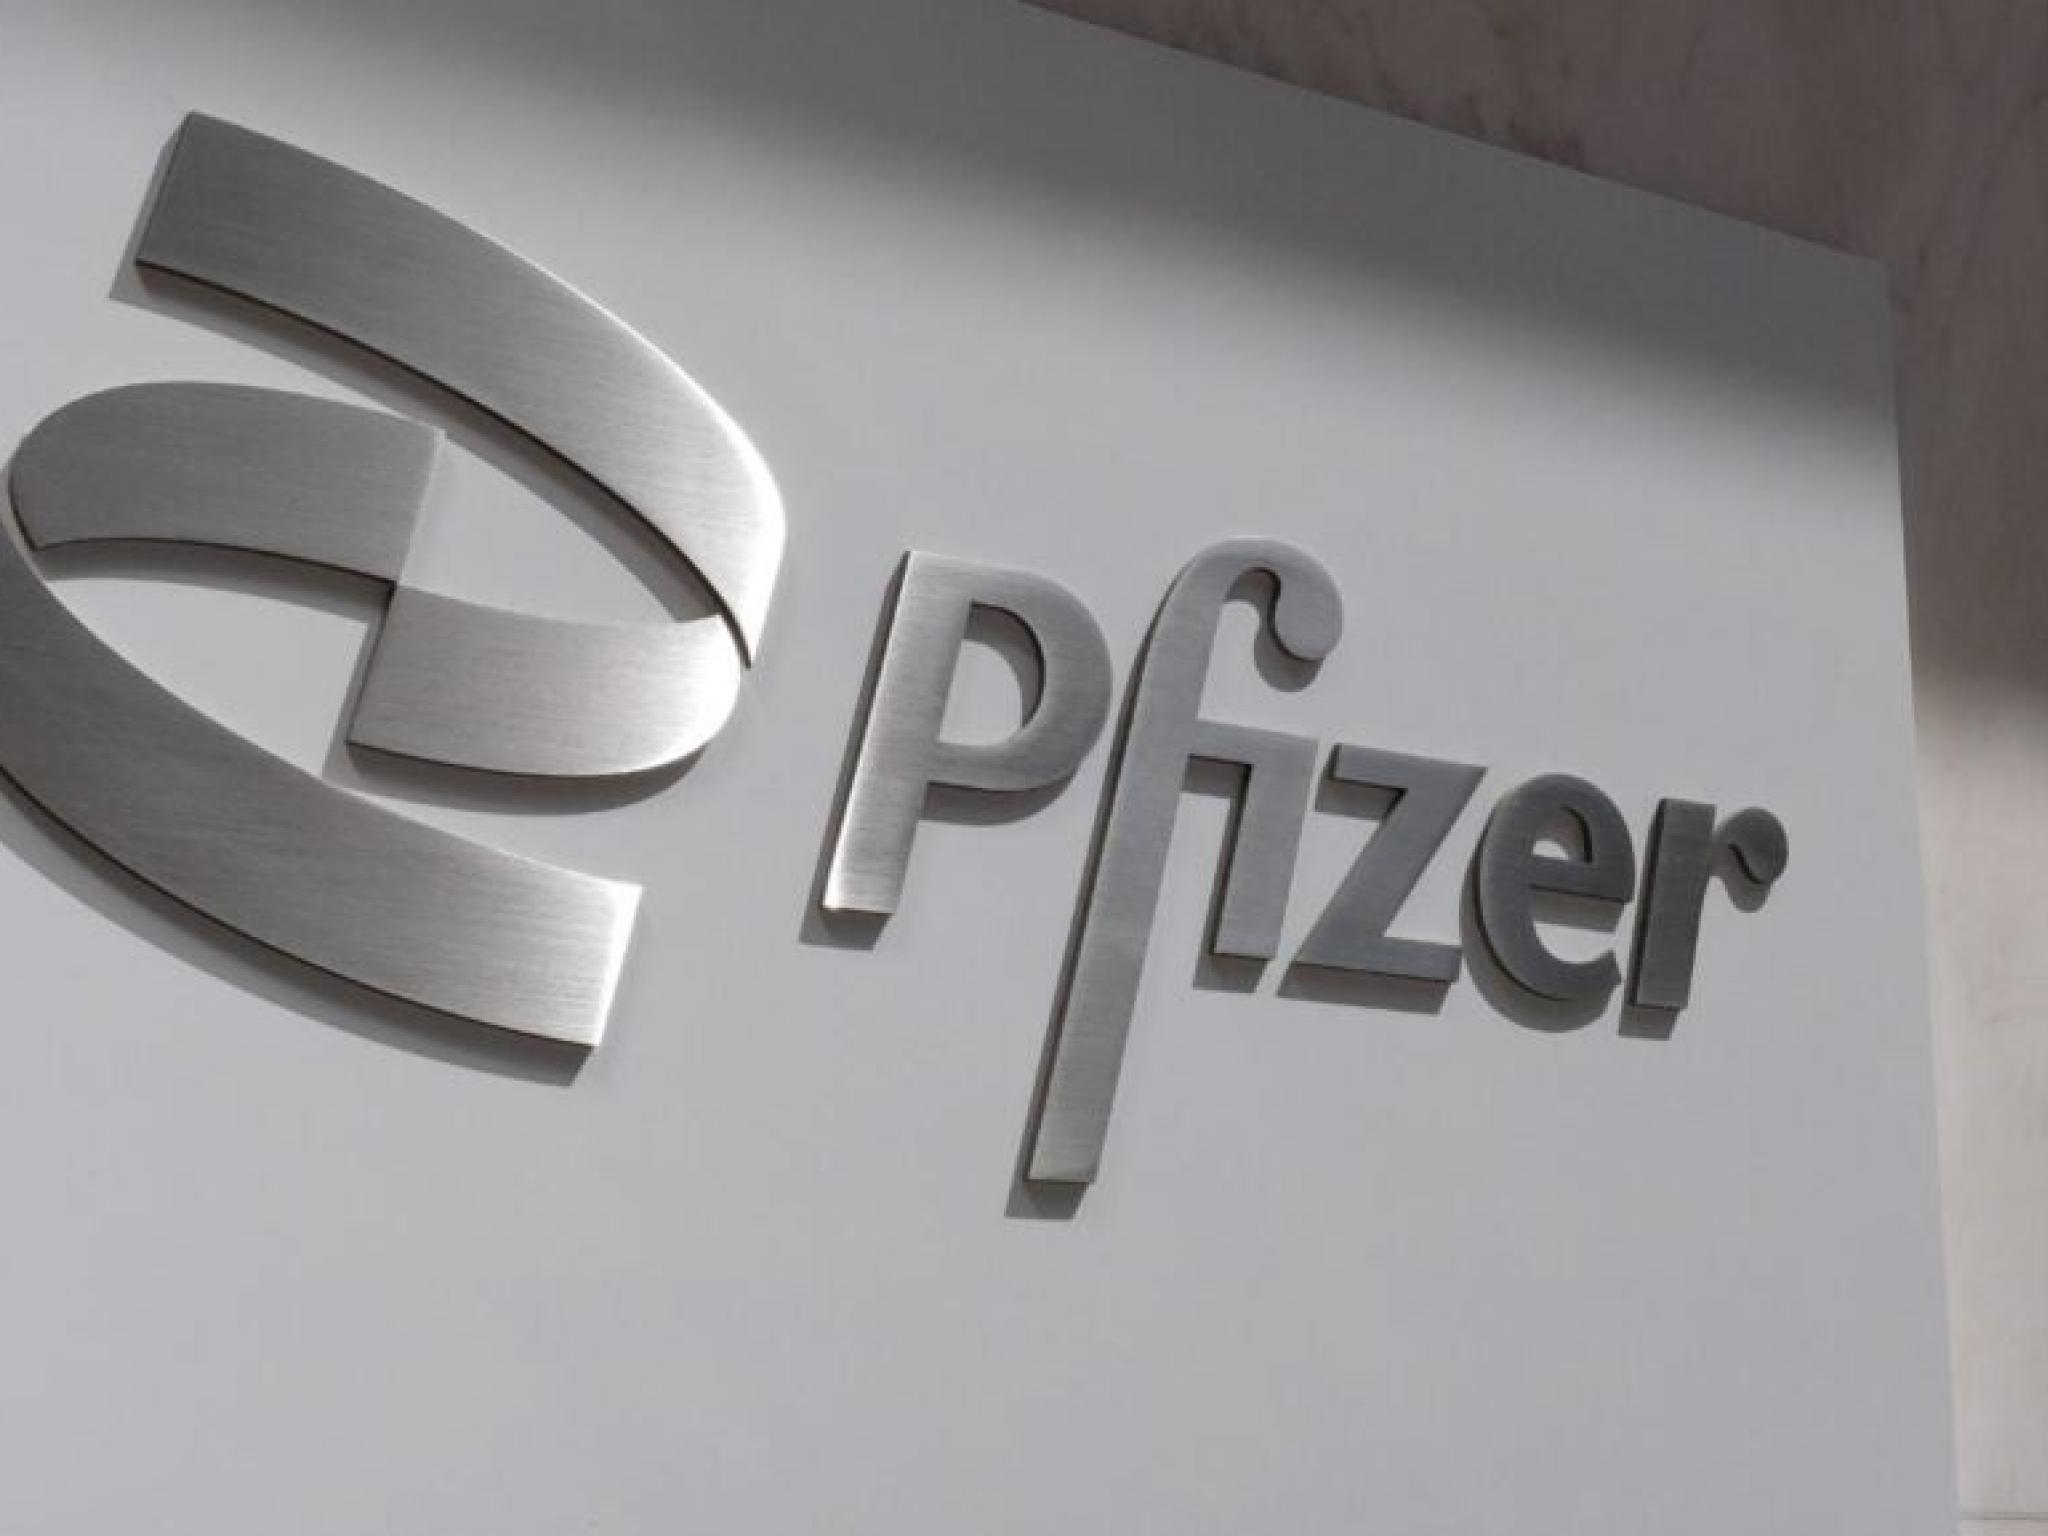  pfizer-initiates-multi-year-cost-reduction-plan-targeting-15b-savings-by-2027 